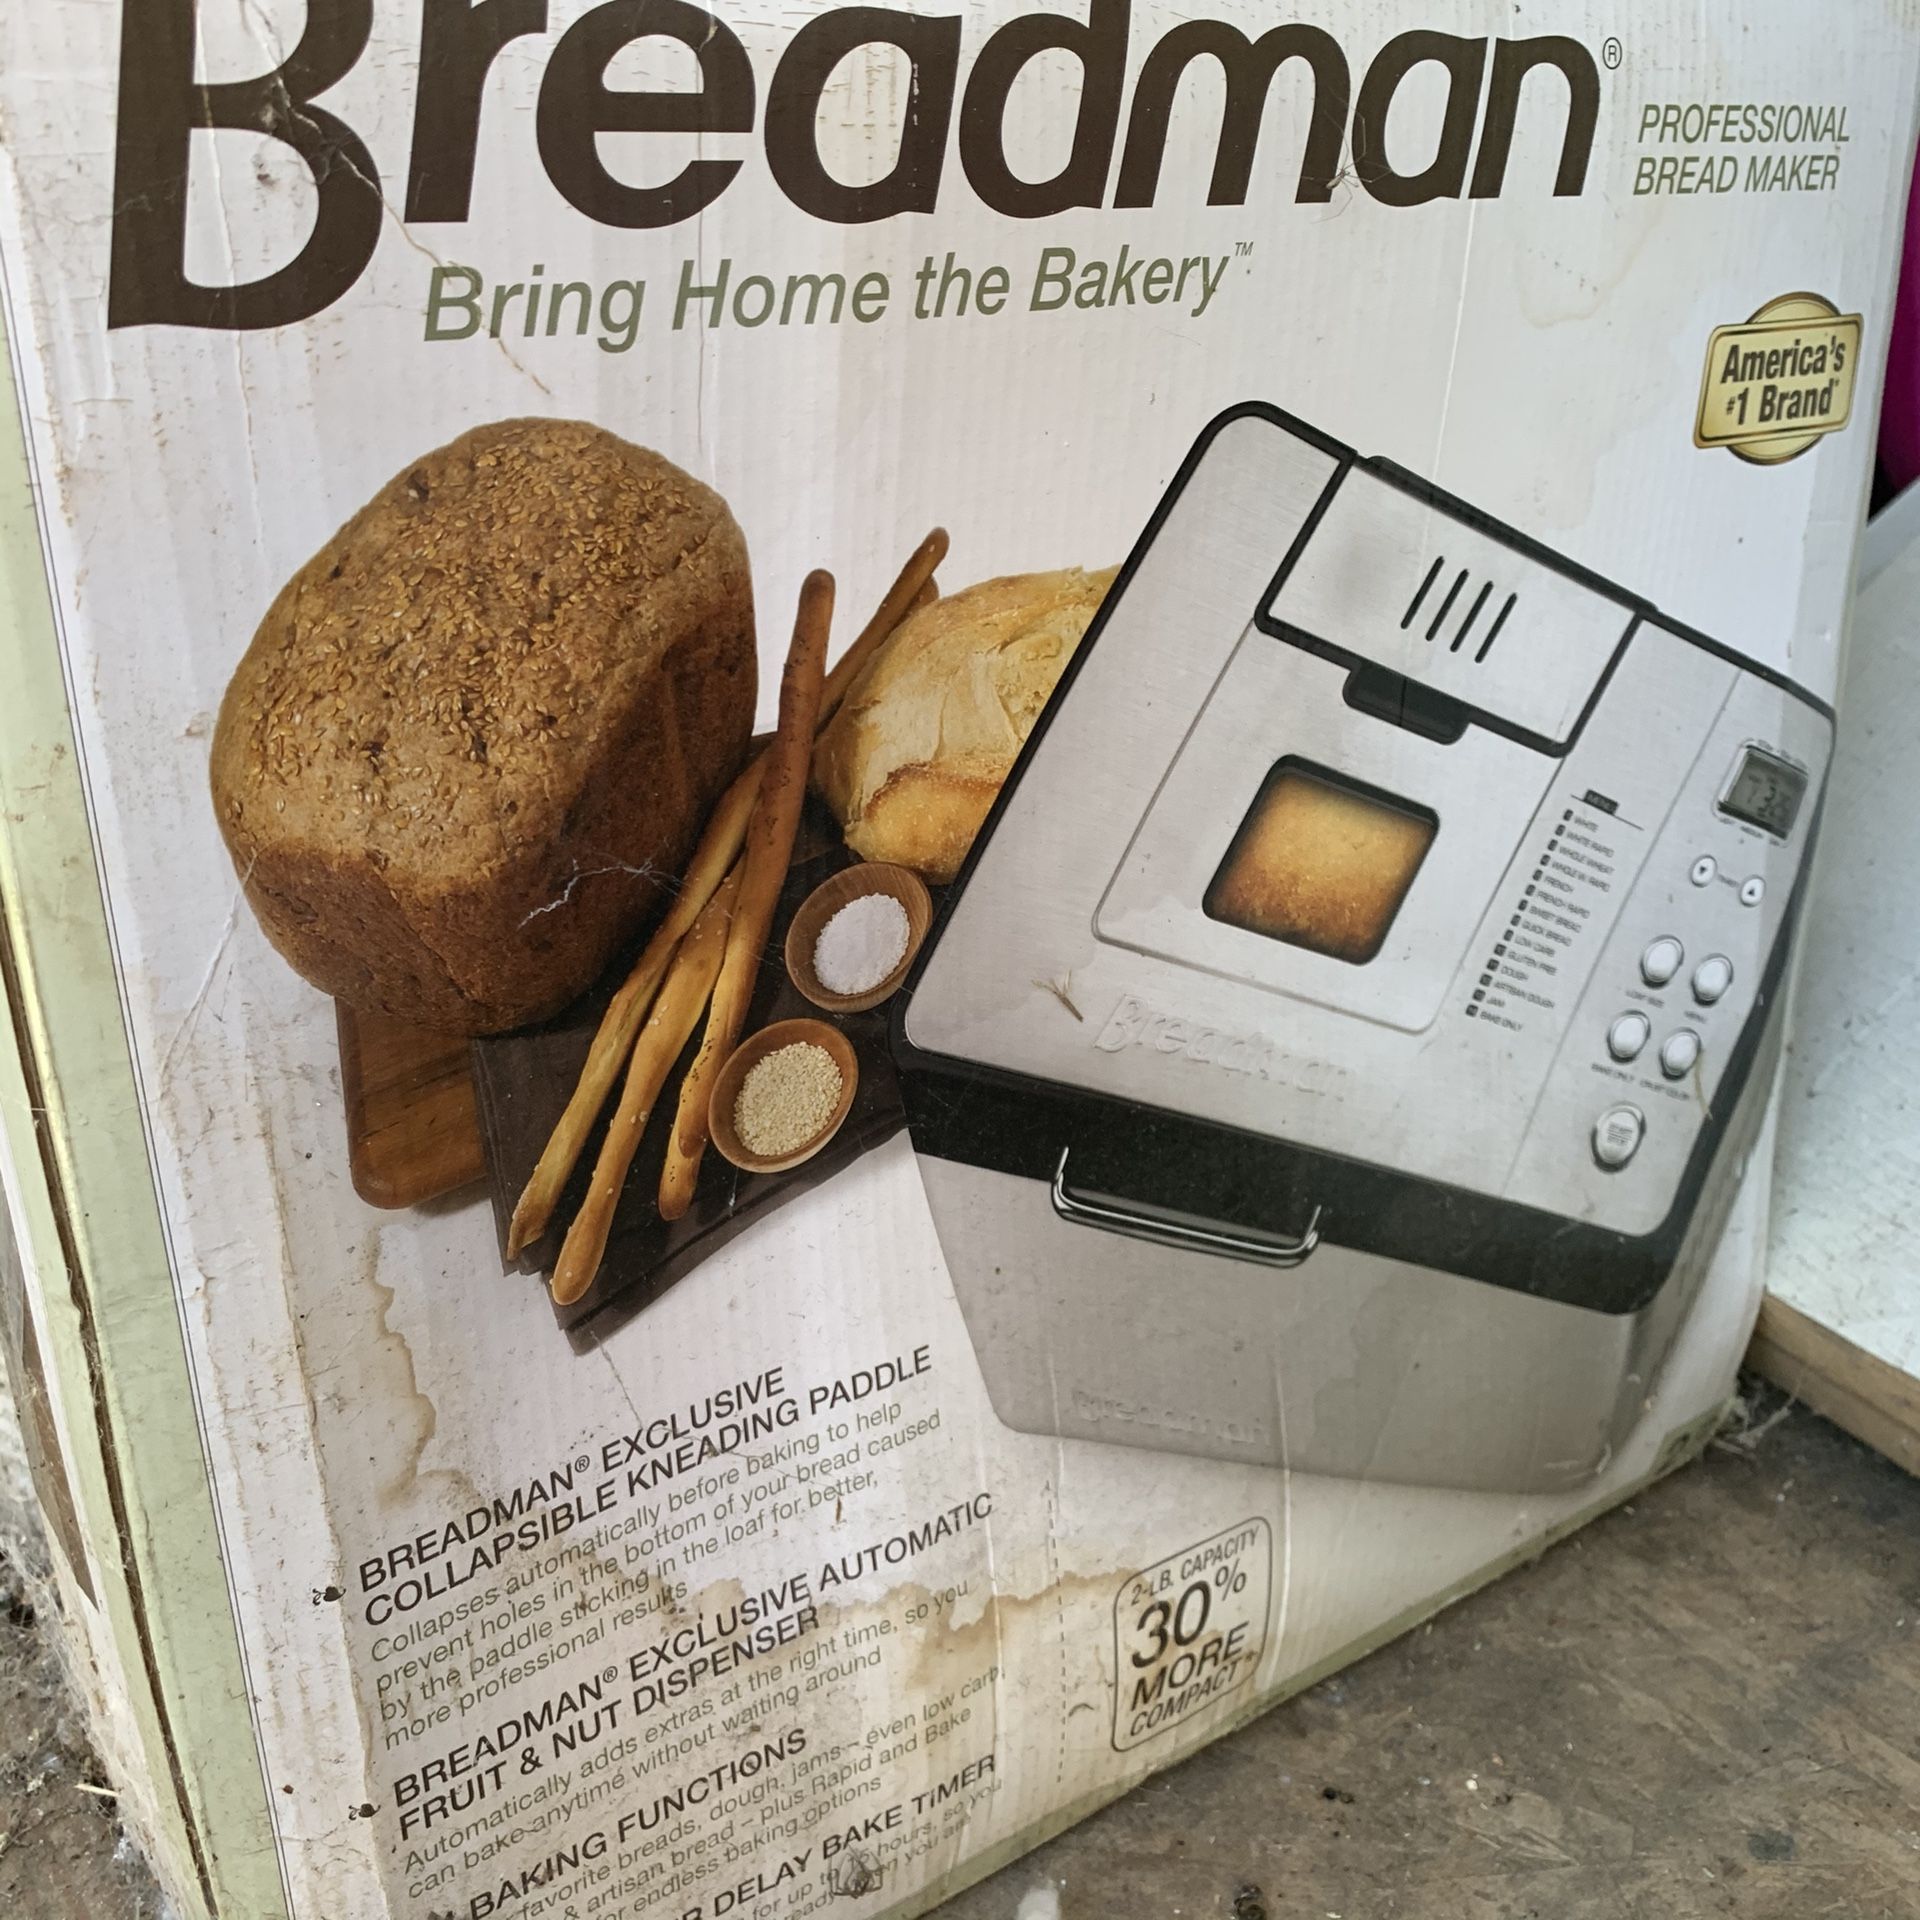 BreadMan Professional Bread Maker